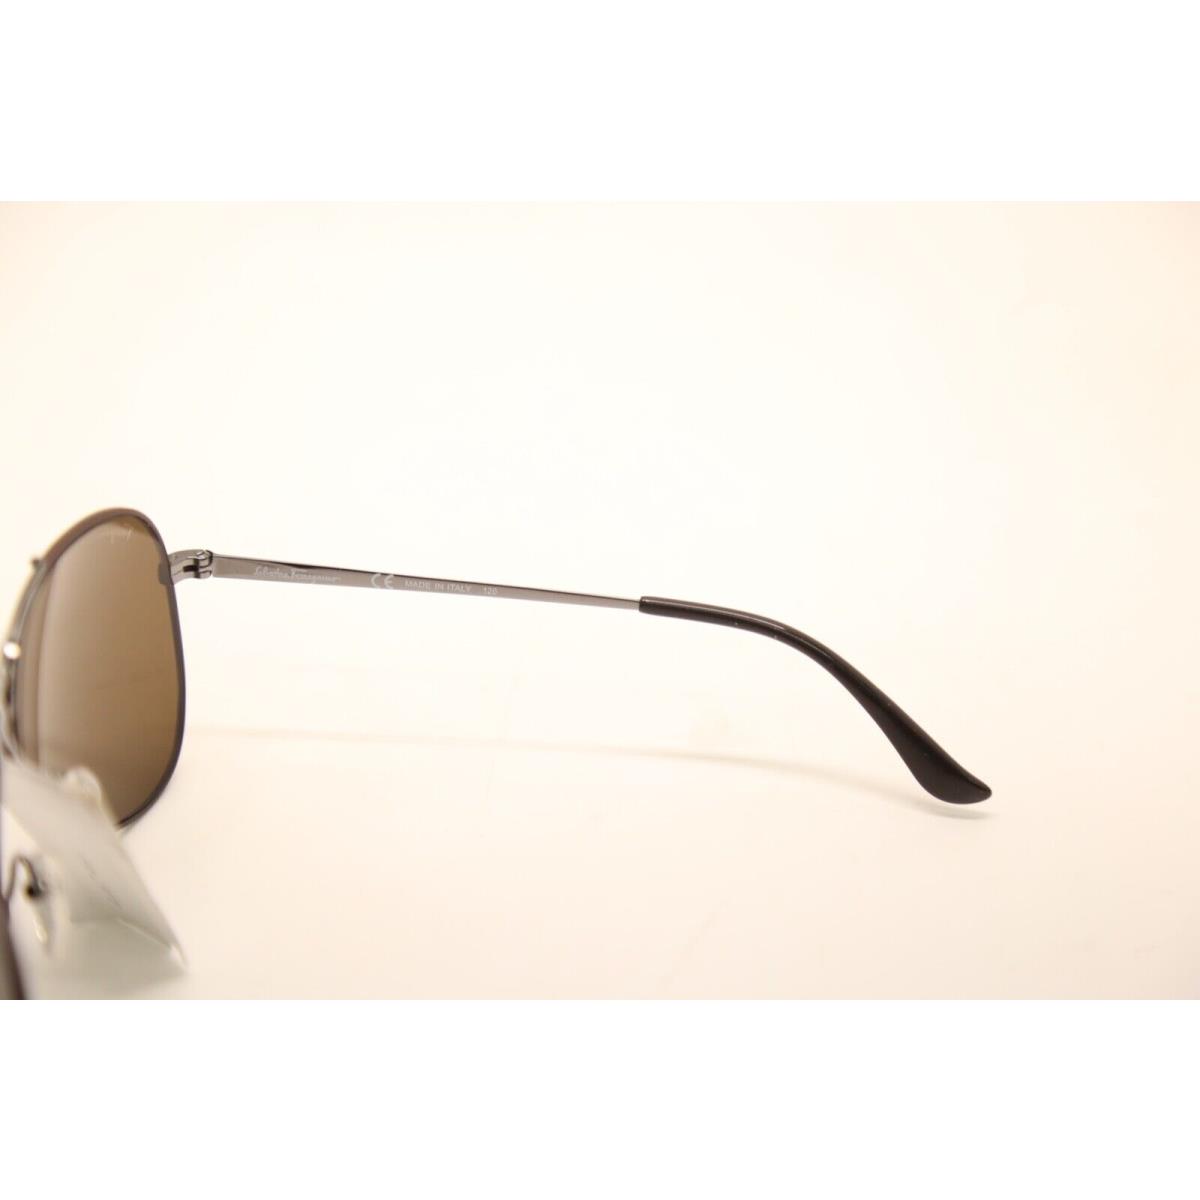 Salvatore Ferragamo sunglasses  - Shiny Gunmetal Frame, Cocoa Lens 3